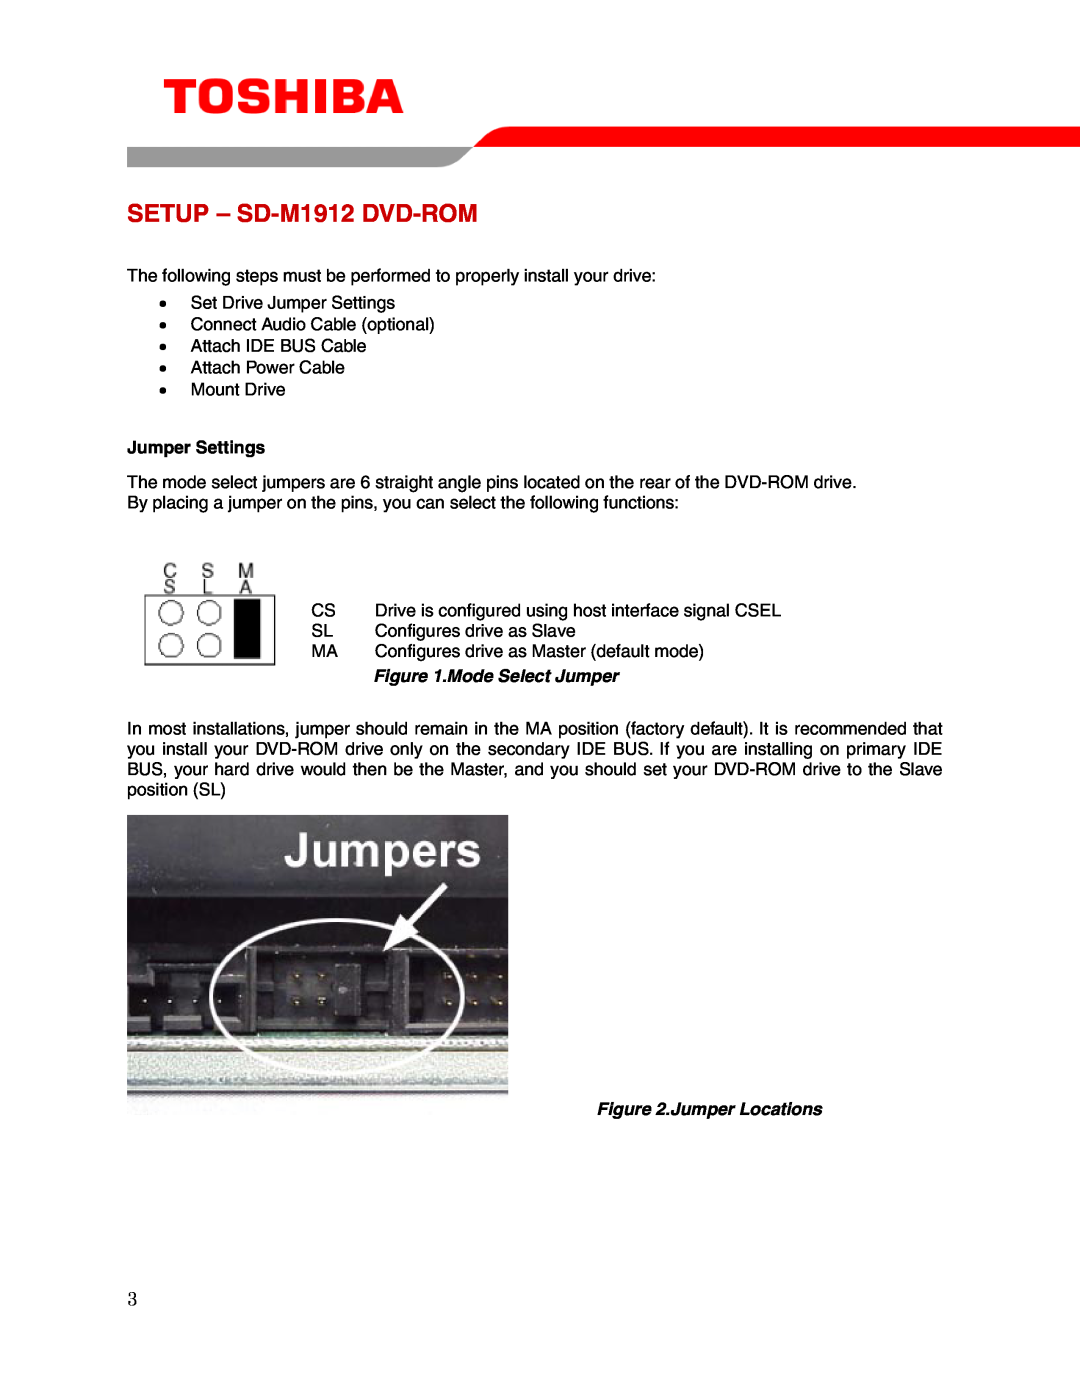 Toshiba user manual SETUP - SD-M1912 DVD-ROM, Jumper Settings, Mode Select Jumper, Jumper Locations 